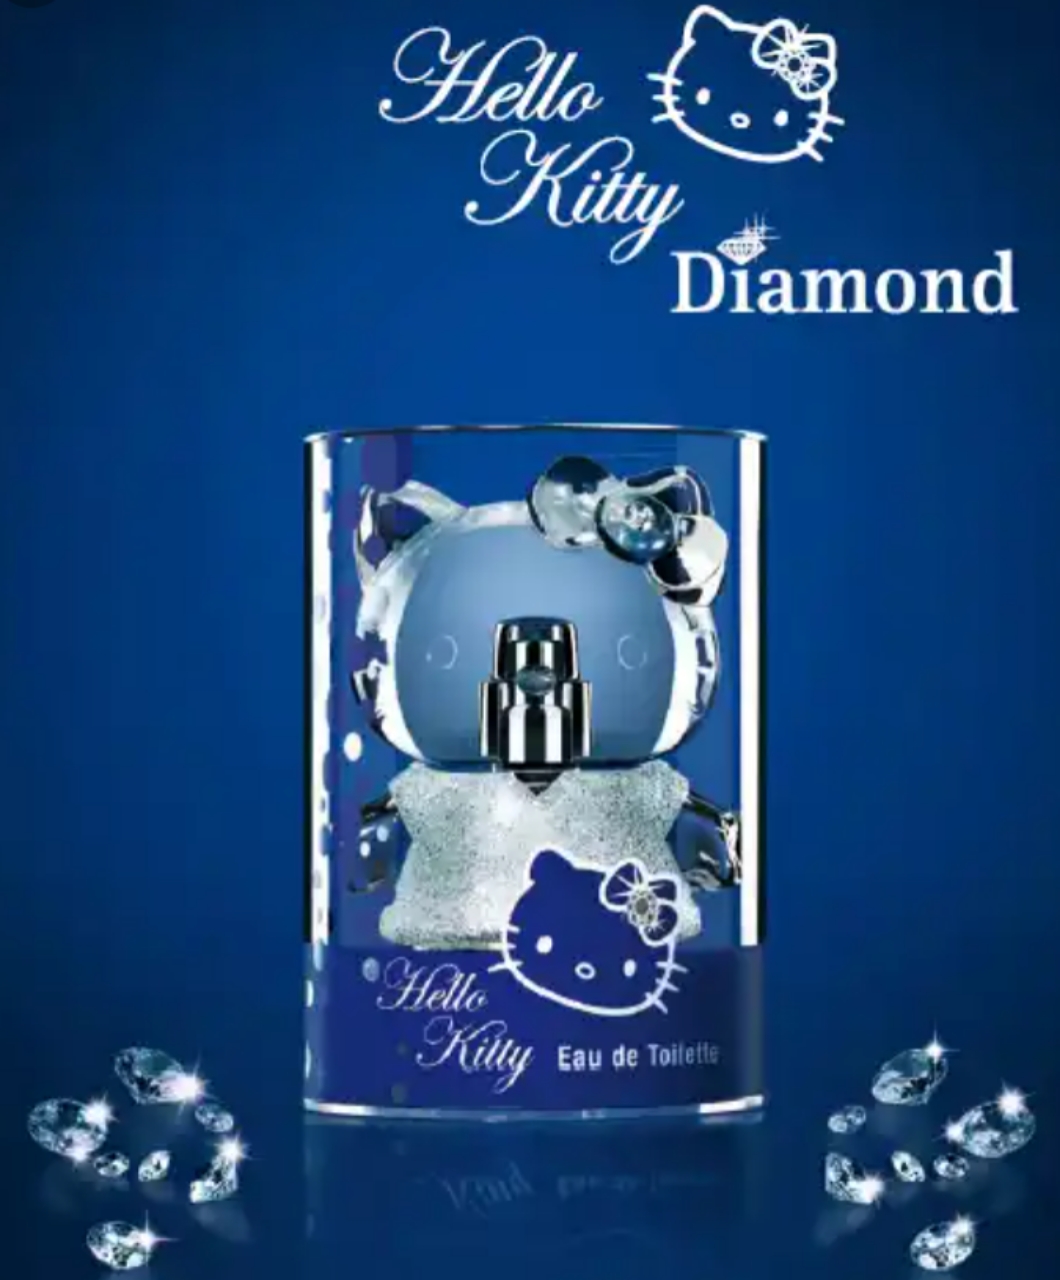 Hello Kitty Diamond Edition by Sanrio